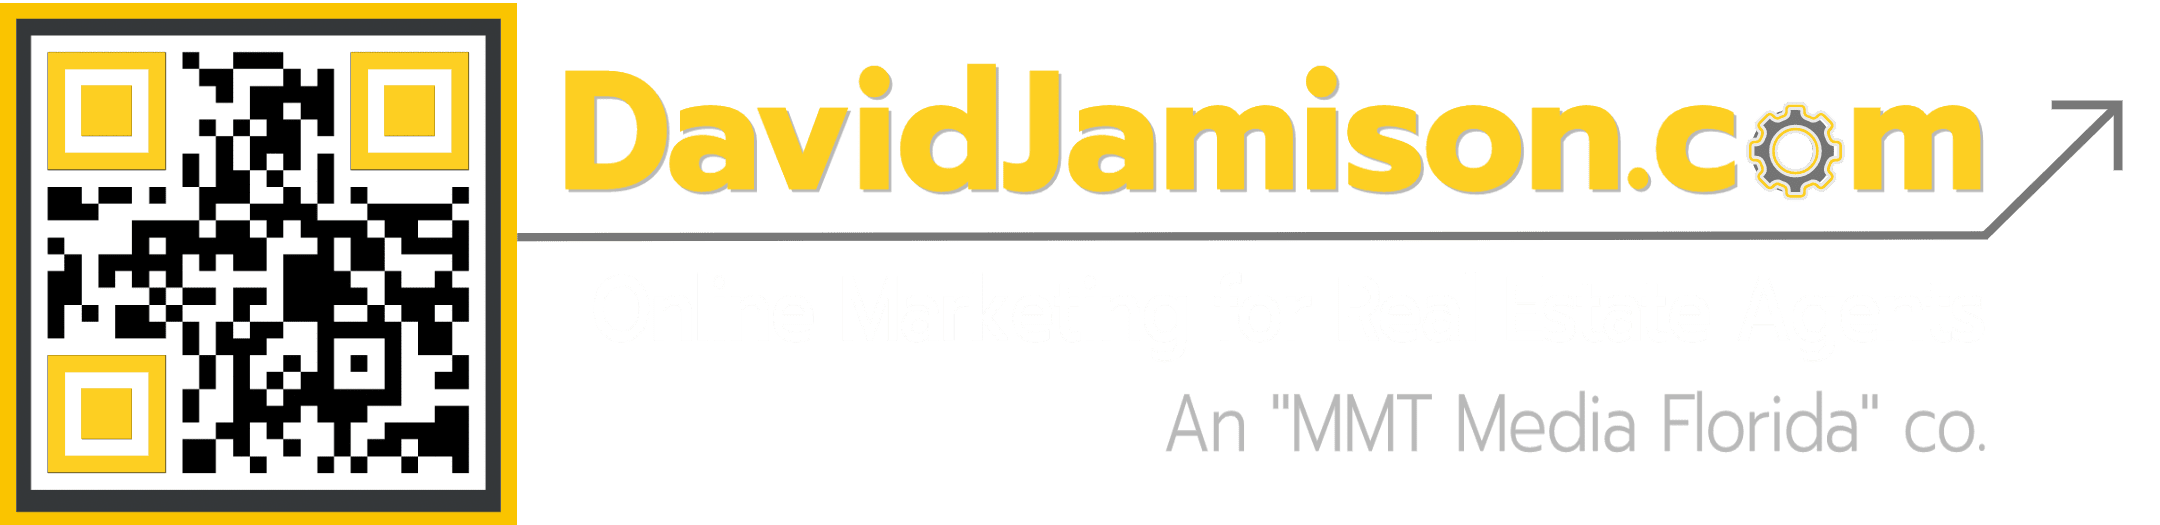 David Jamison Digital Marketing Consultant